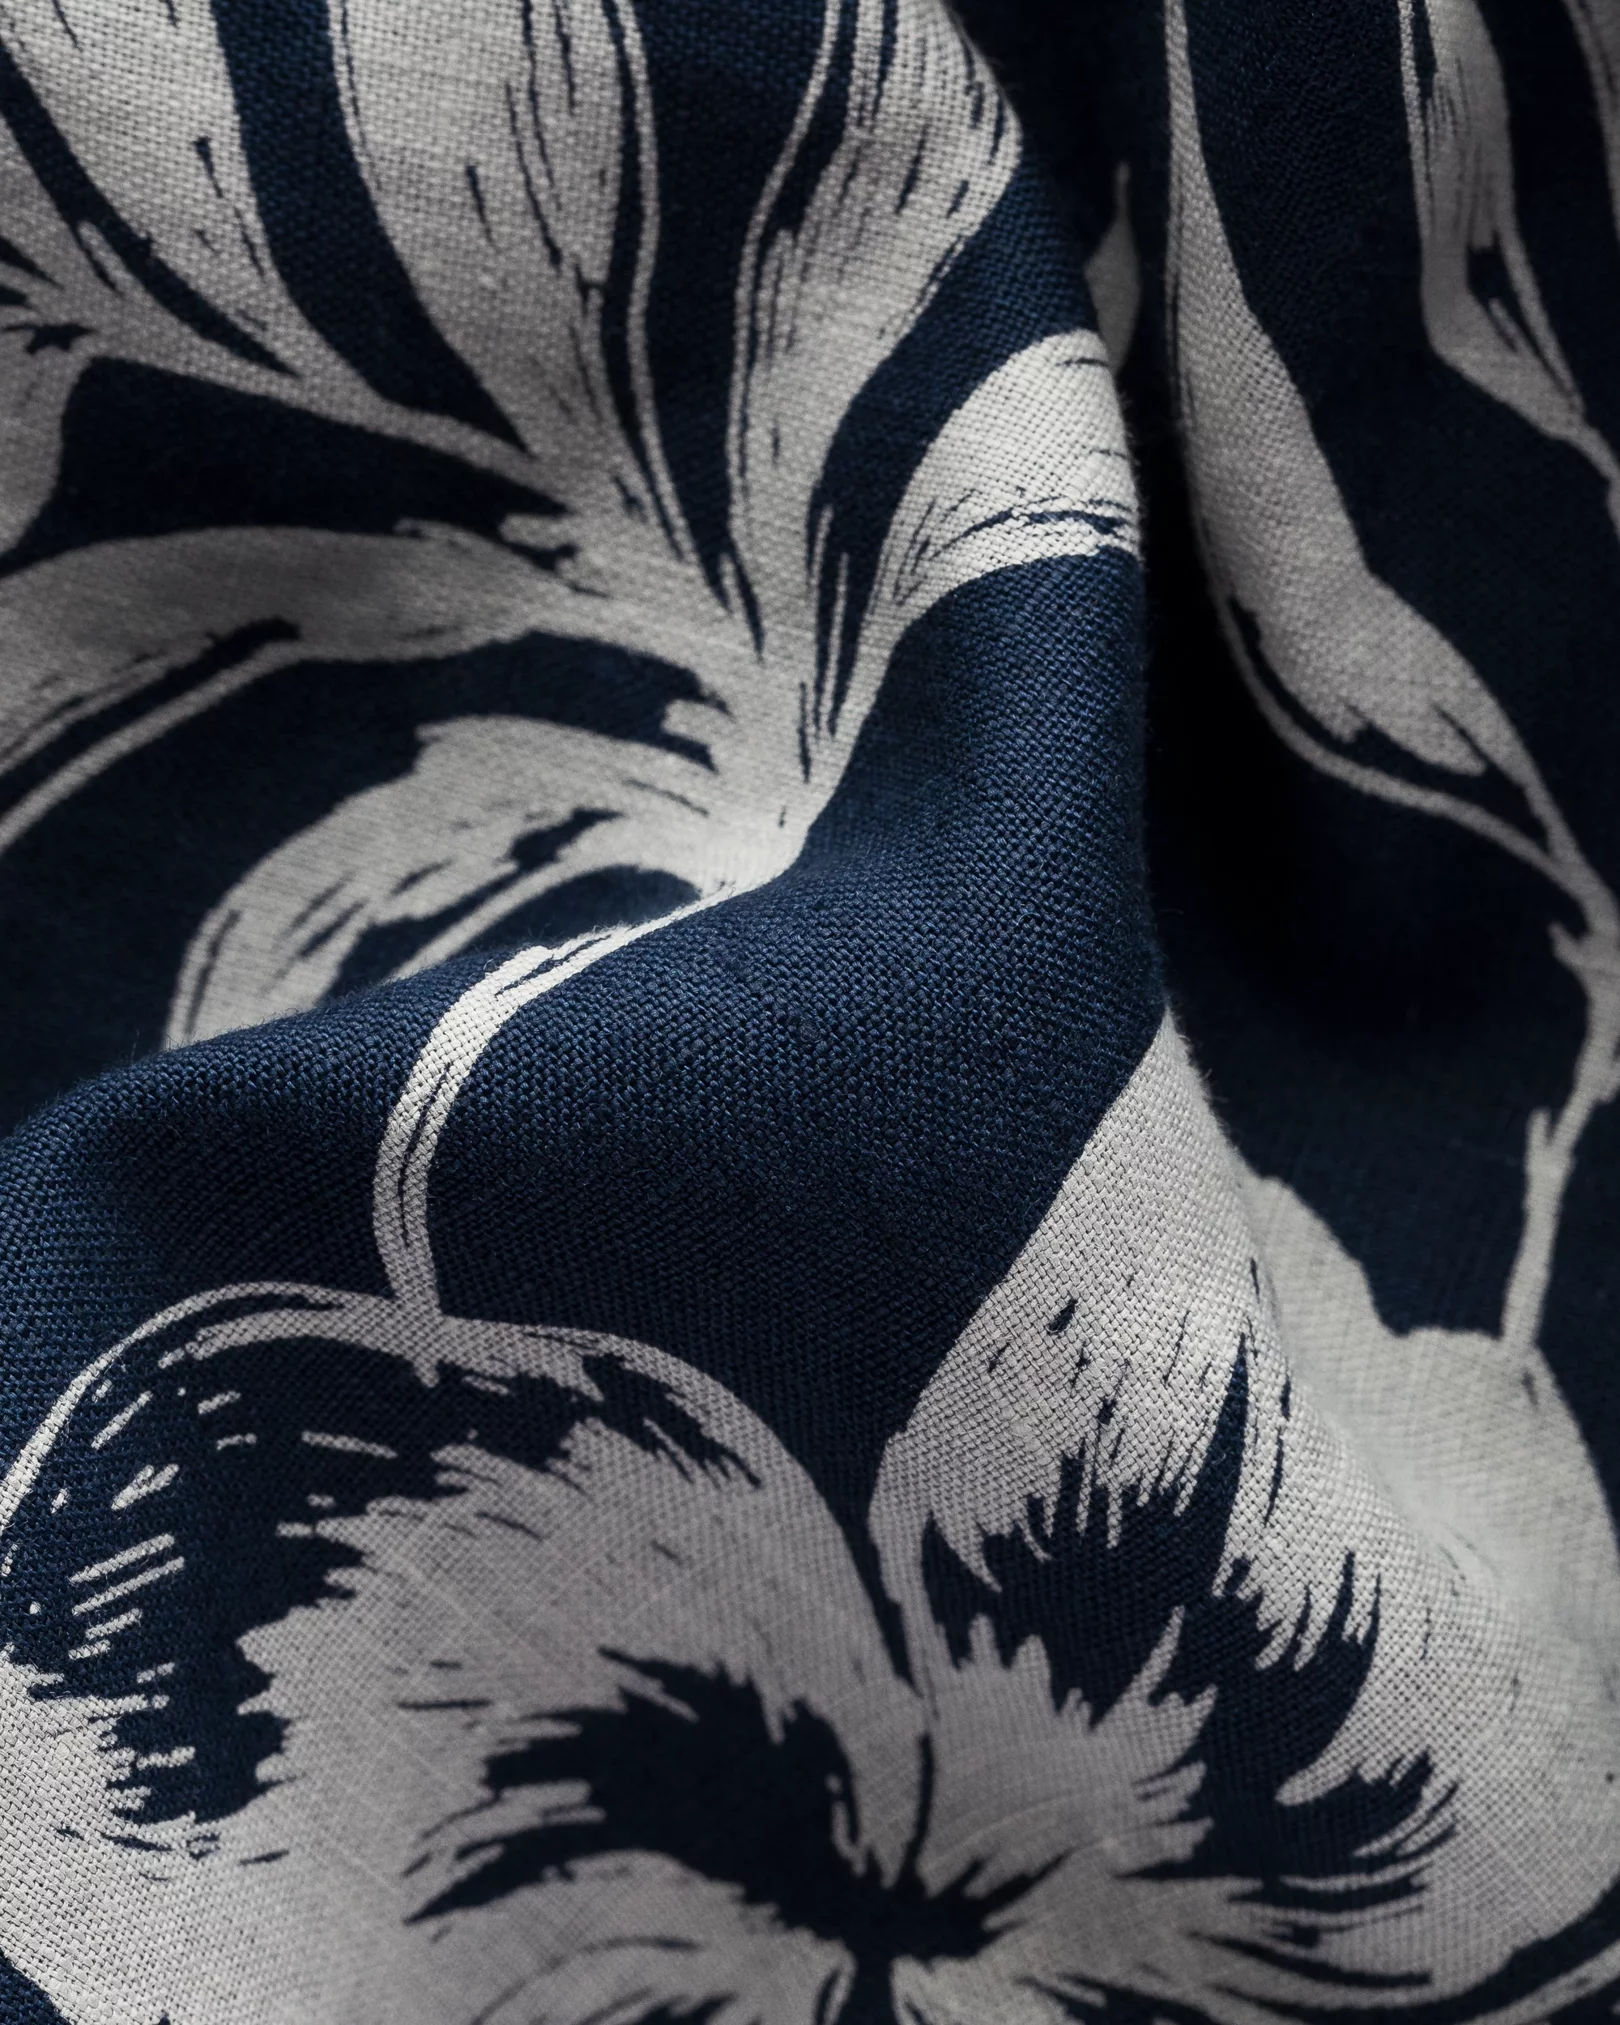 Eton - mid blue linen resort folded short sleeve regular